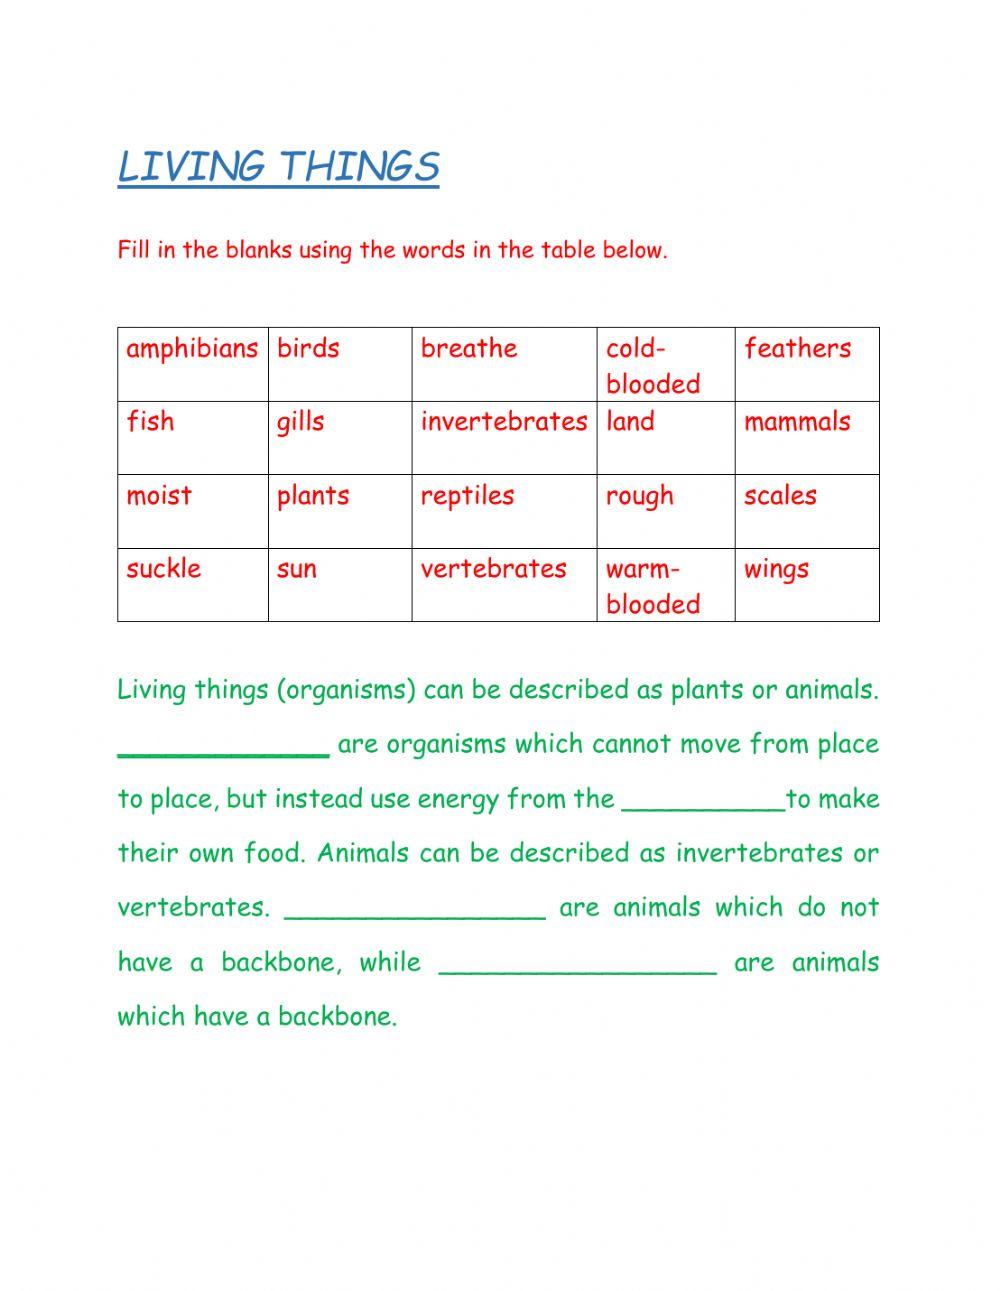 Living Things